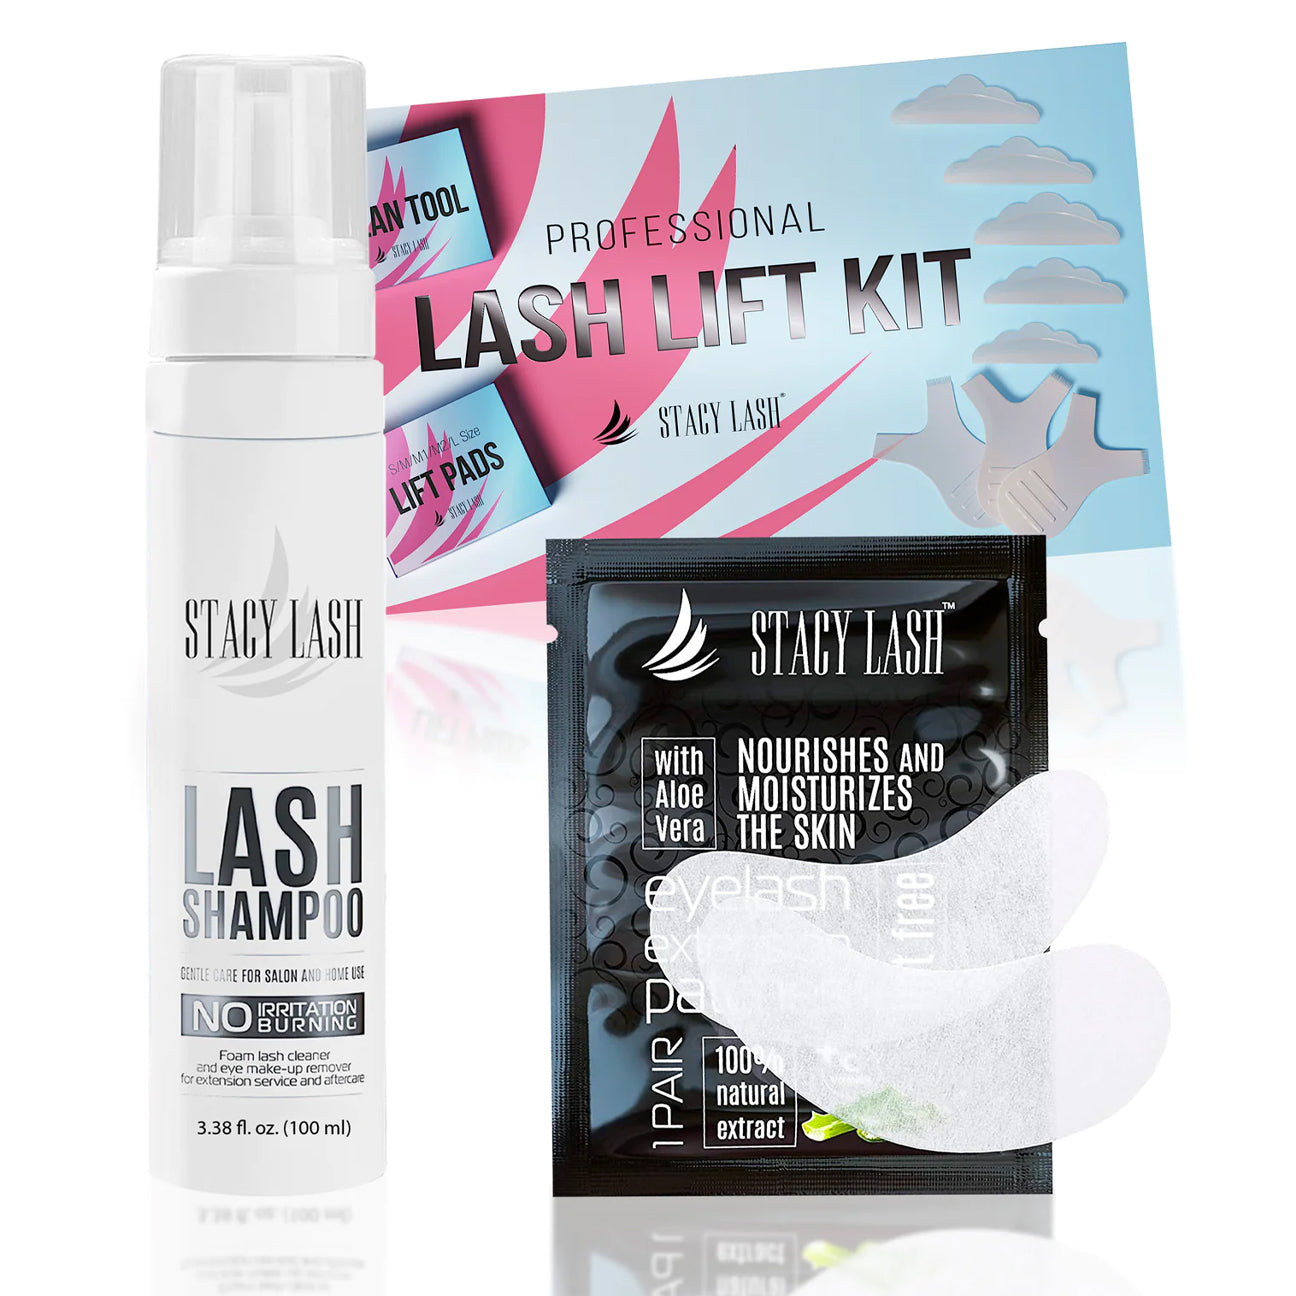 Stacy Lash Bundle: Lift Kit & Eye Pads 100pack & Lash Shampoo 100ml